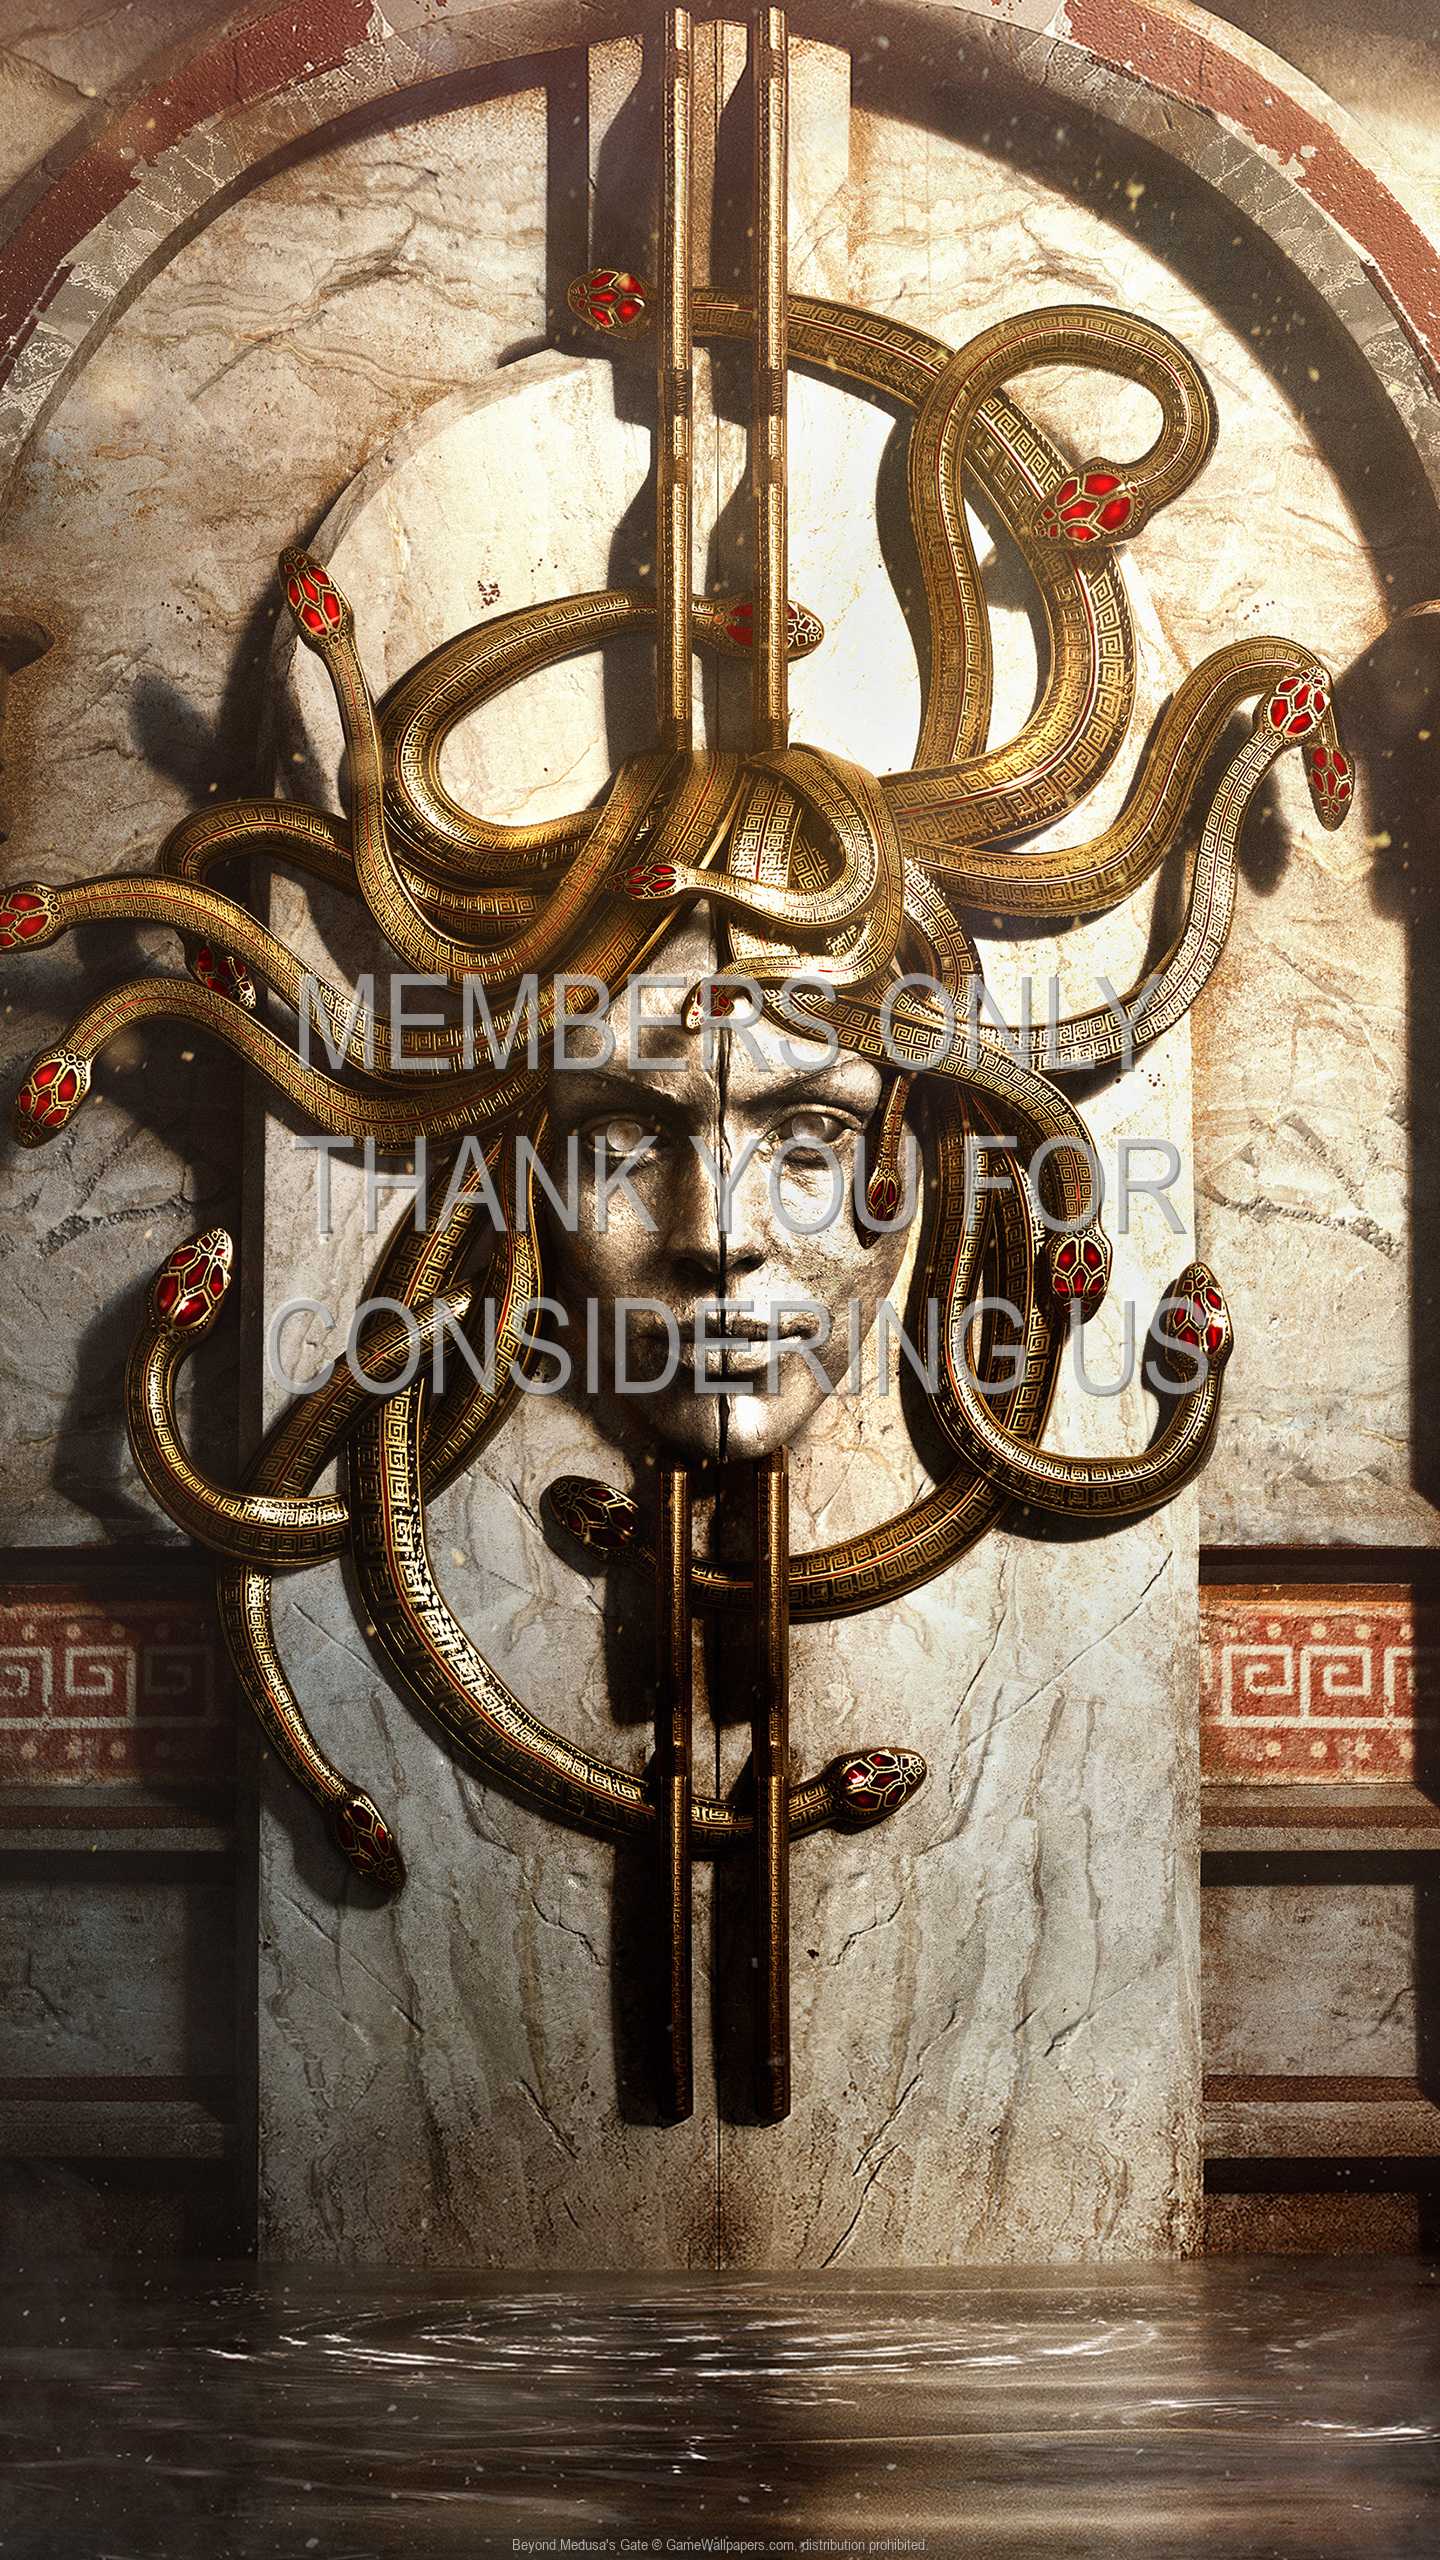 Beyond Medusa's Gate 1440p Vertical Mobile wallpaper or background 01